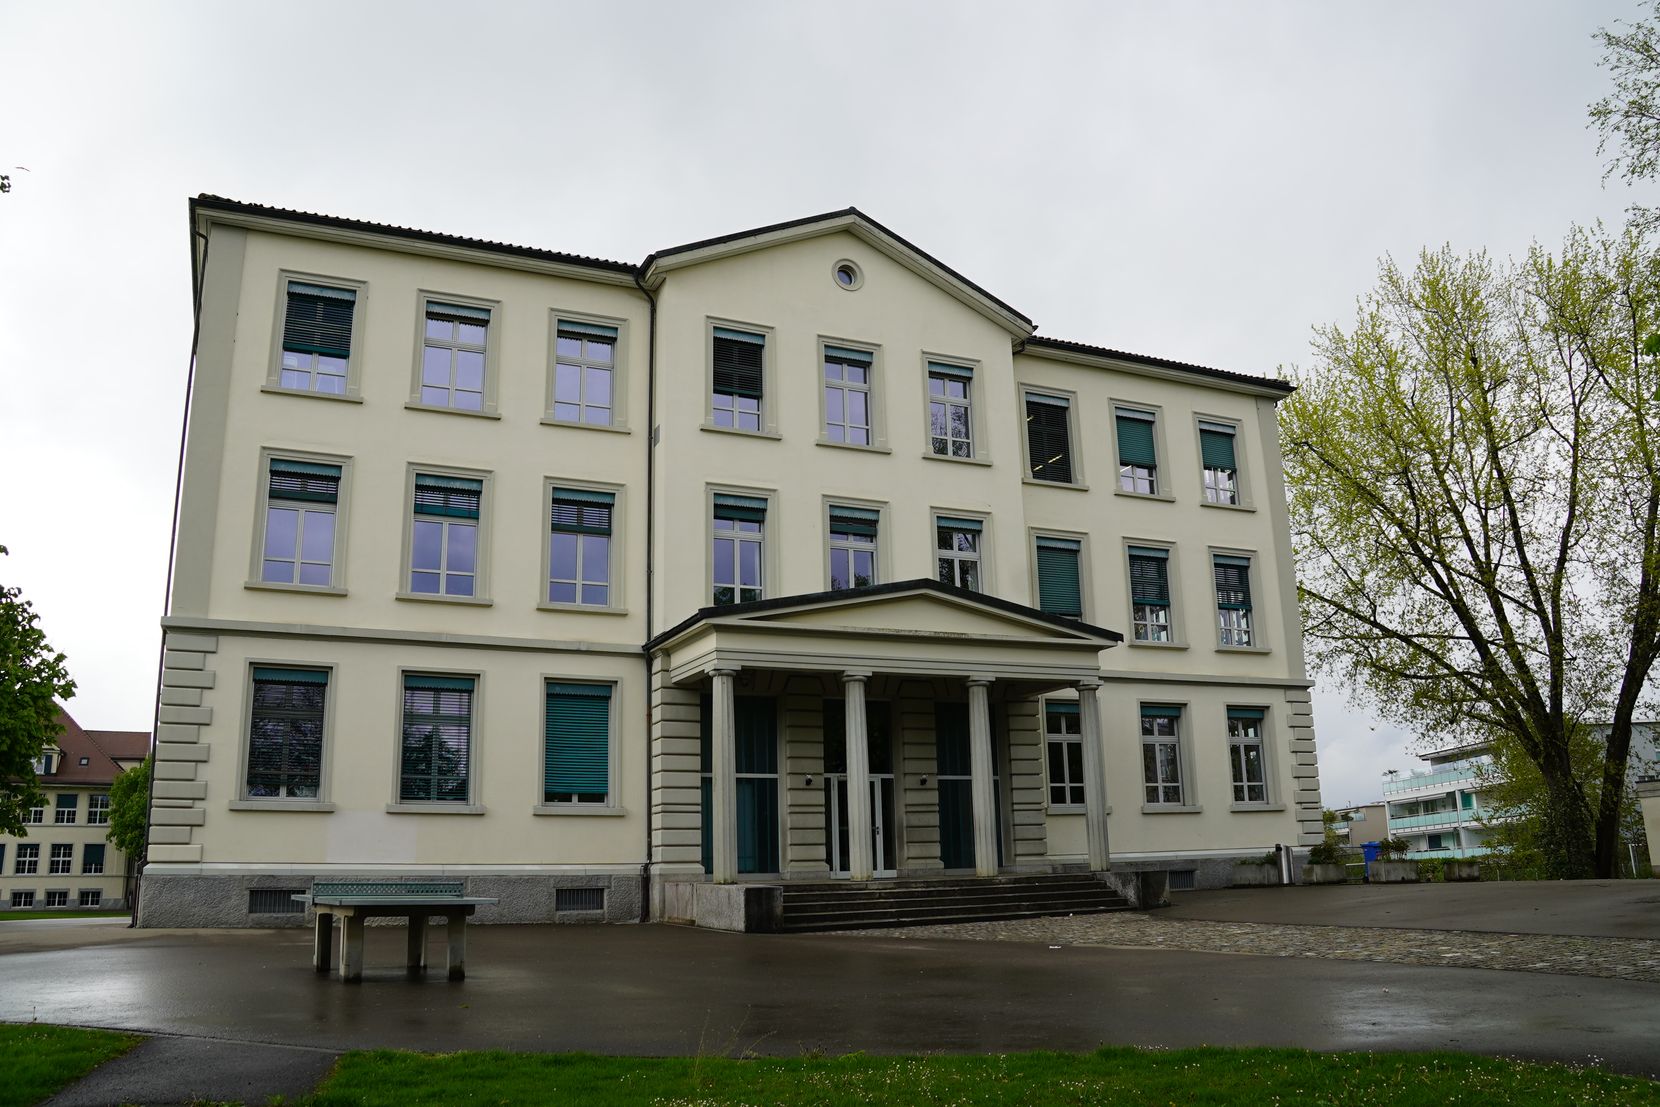 Schulhaus Obermatt in Pfäffikon.